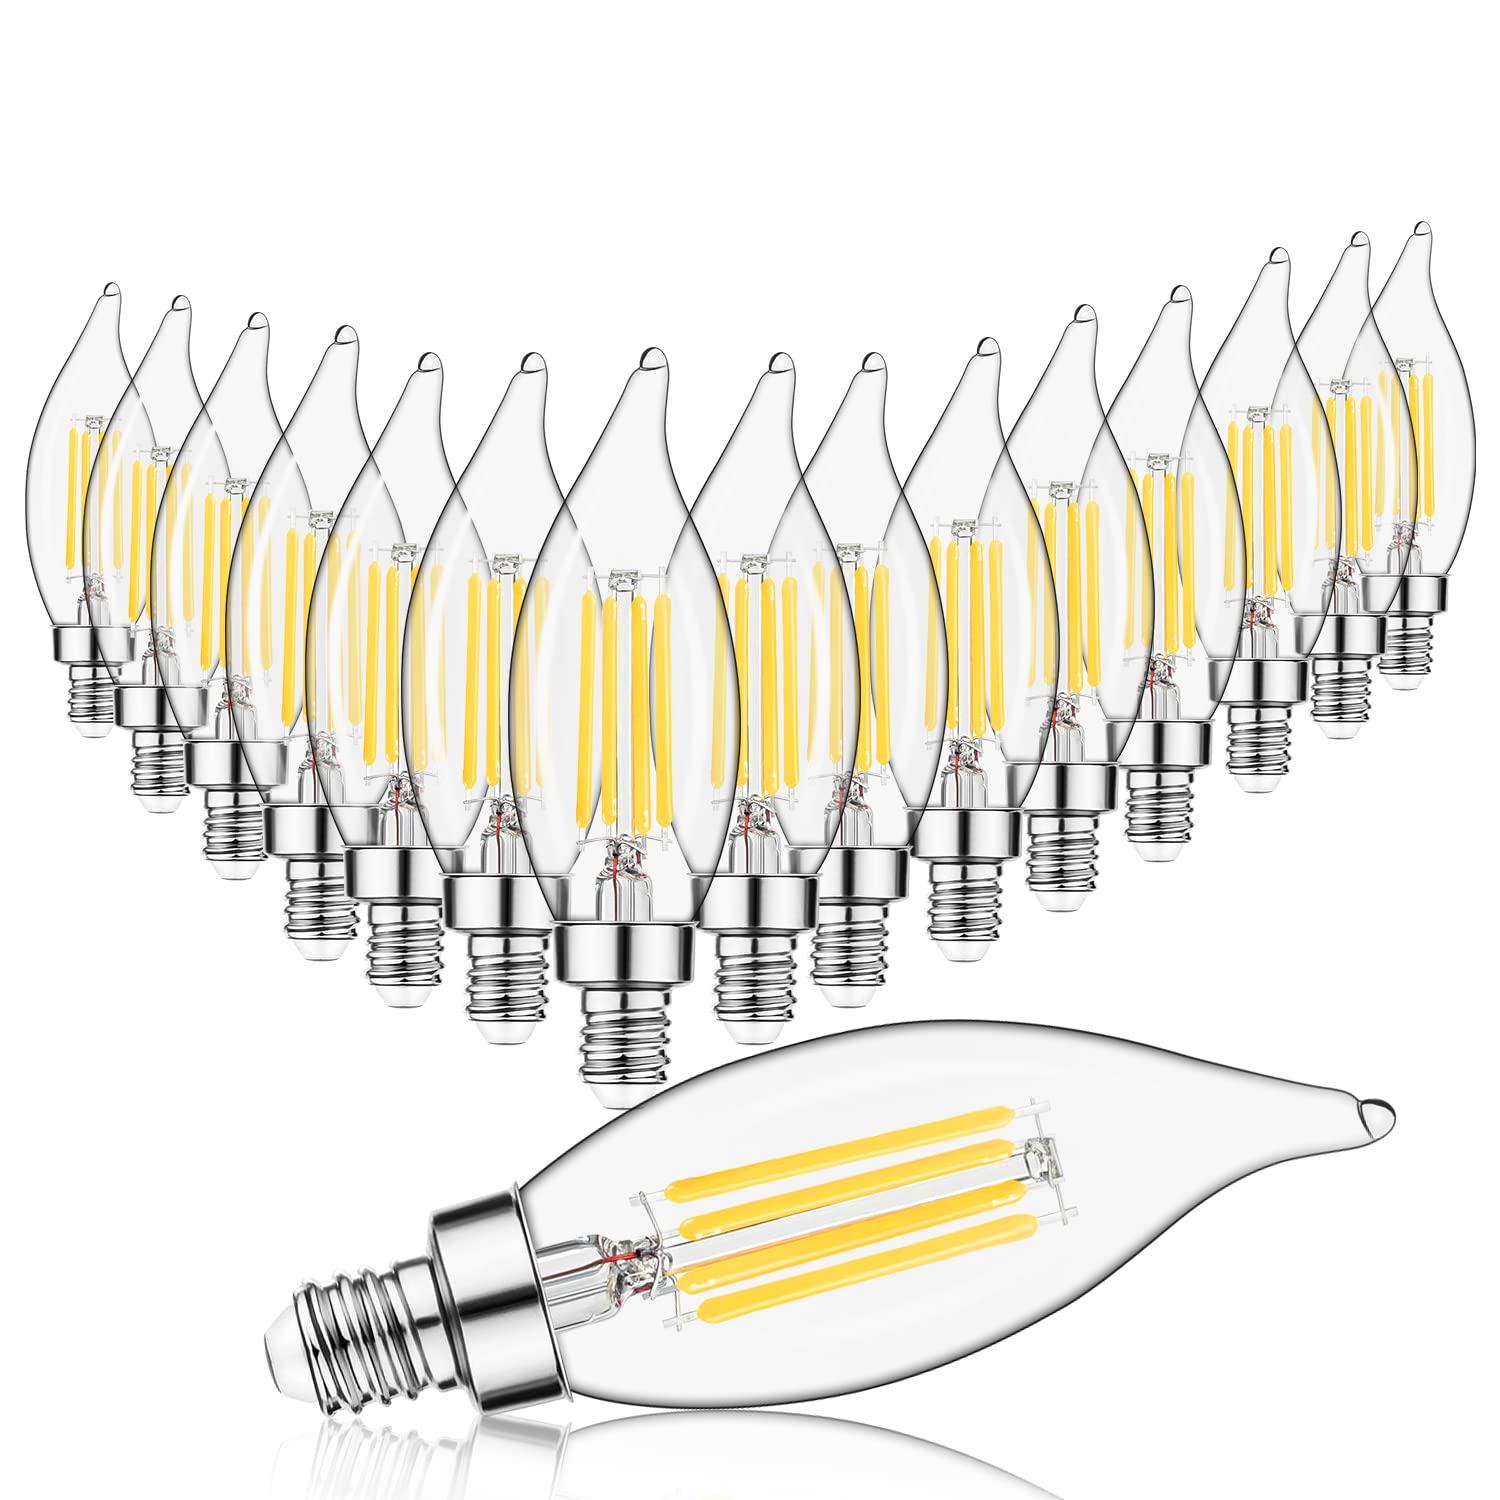 Sigalux E12 candelabra Bulb 60W, LED chandelier Light Bulbs Dimmable, Flame Tip cA10 candle Light Bulbs, 4.5W, 500LM 2700K Soft 